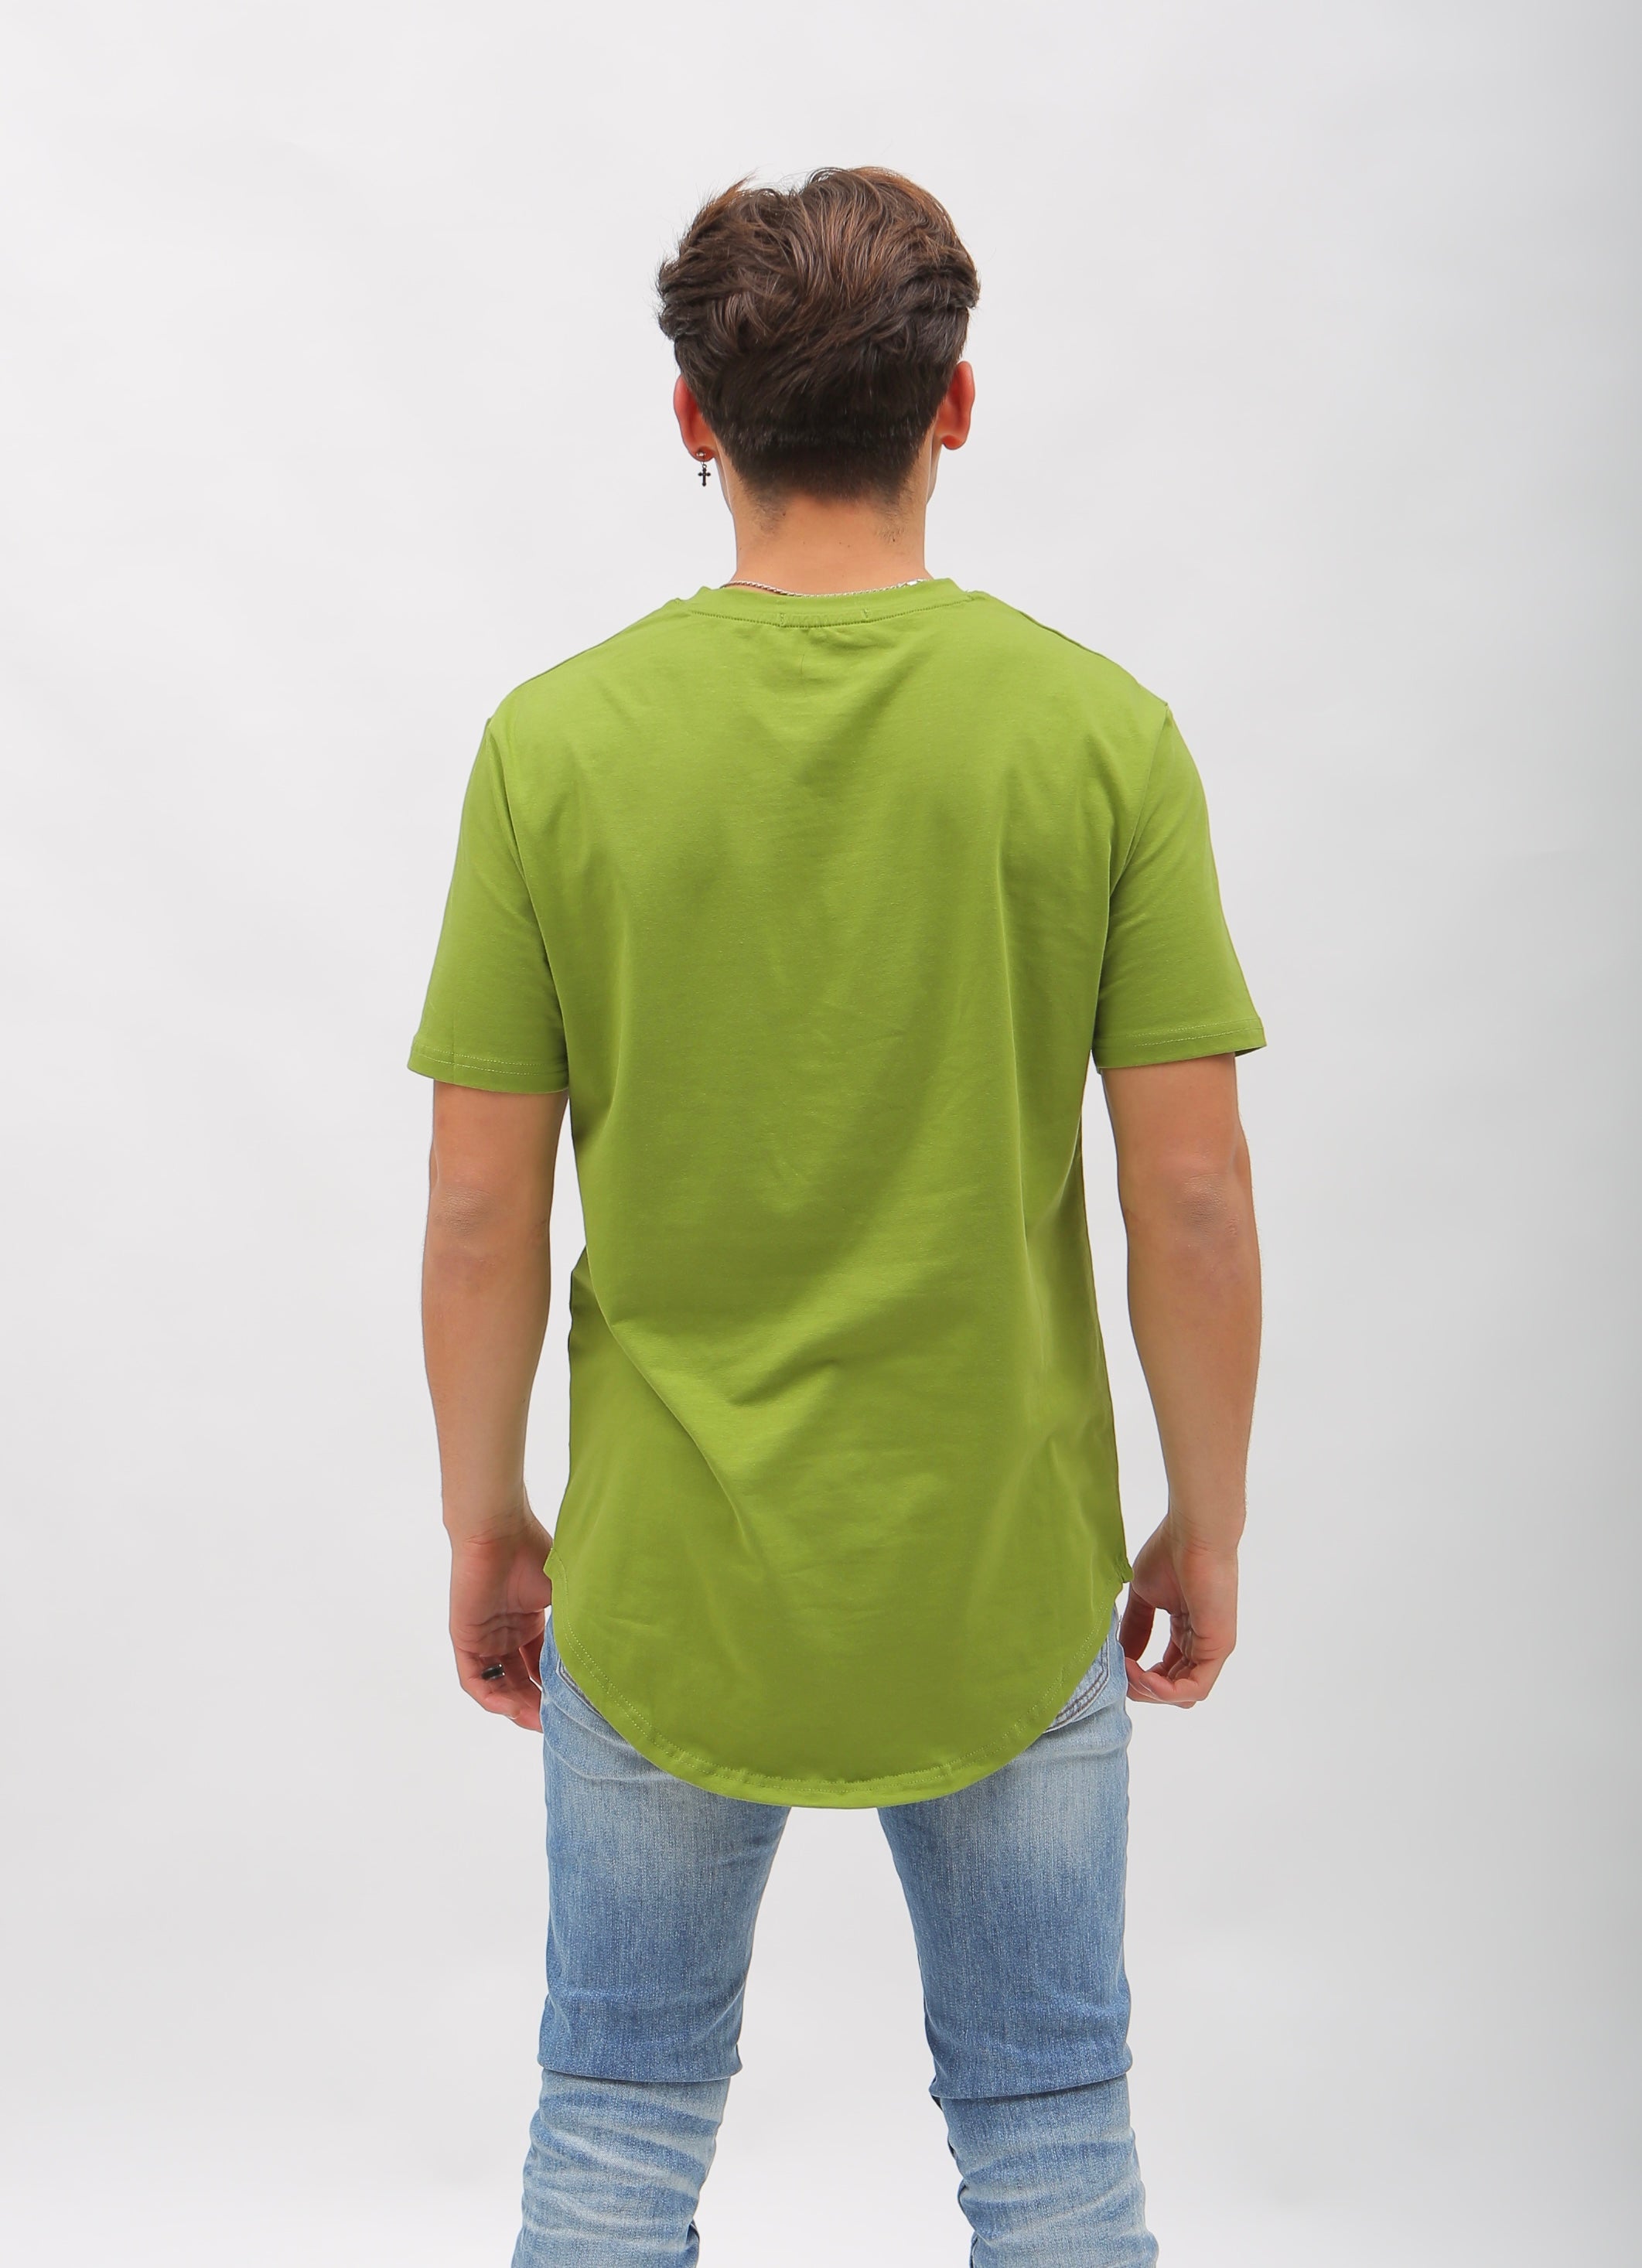 Green/Gold Nokwal Signature T-Shirt